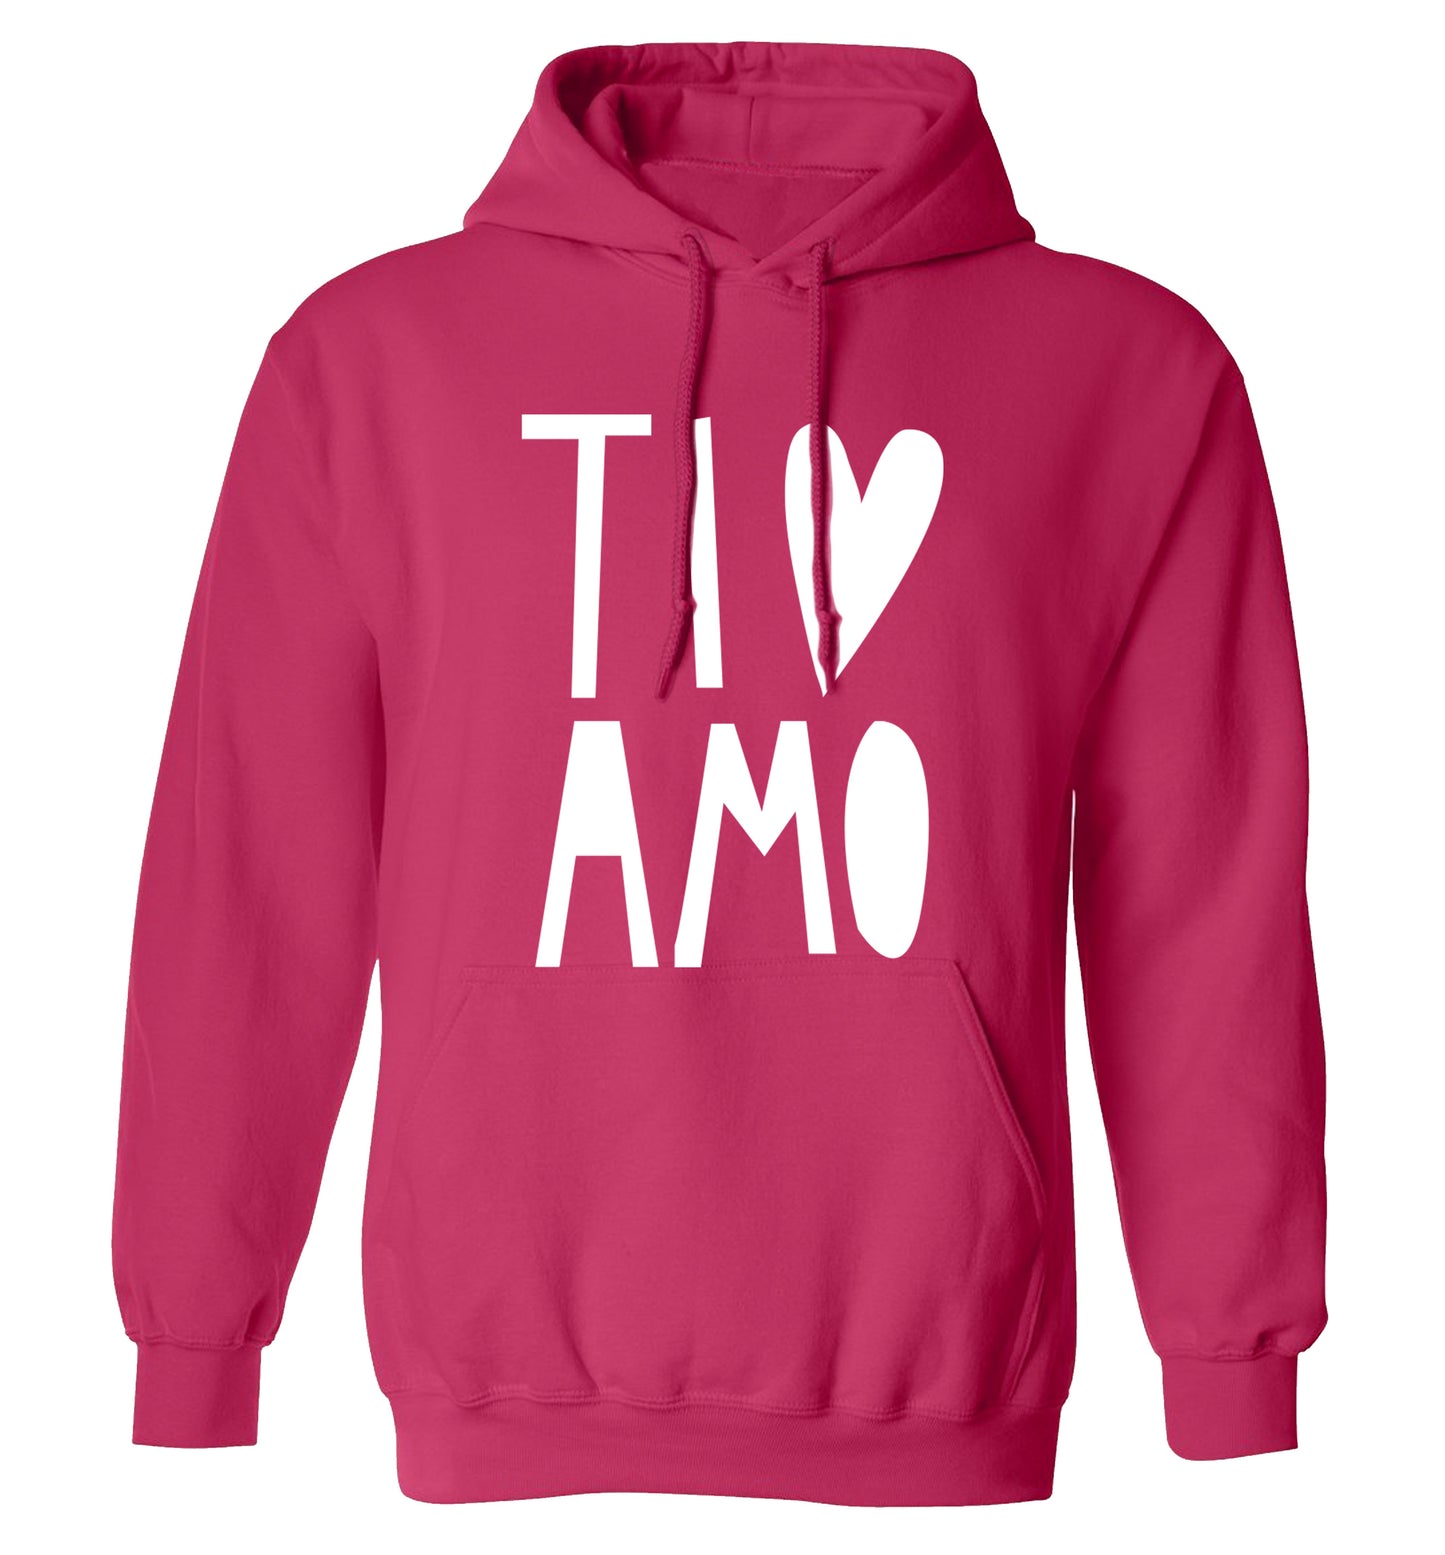 Ti amo - I love you adults unisex pink hoodie 2XL